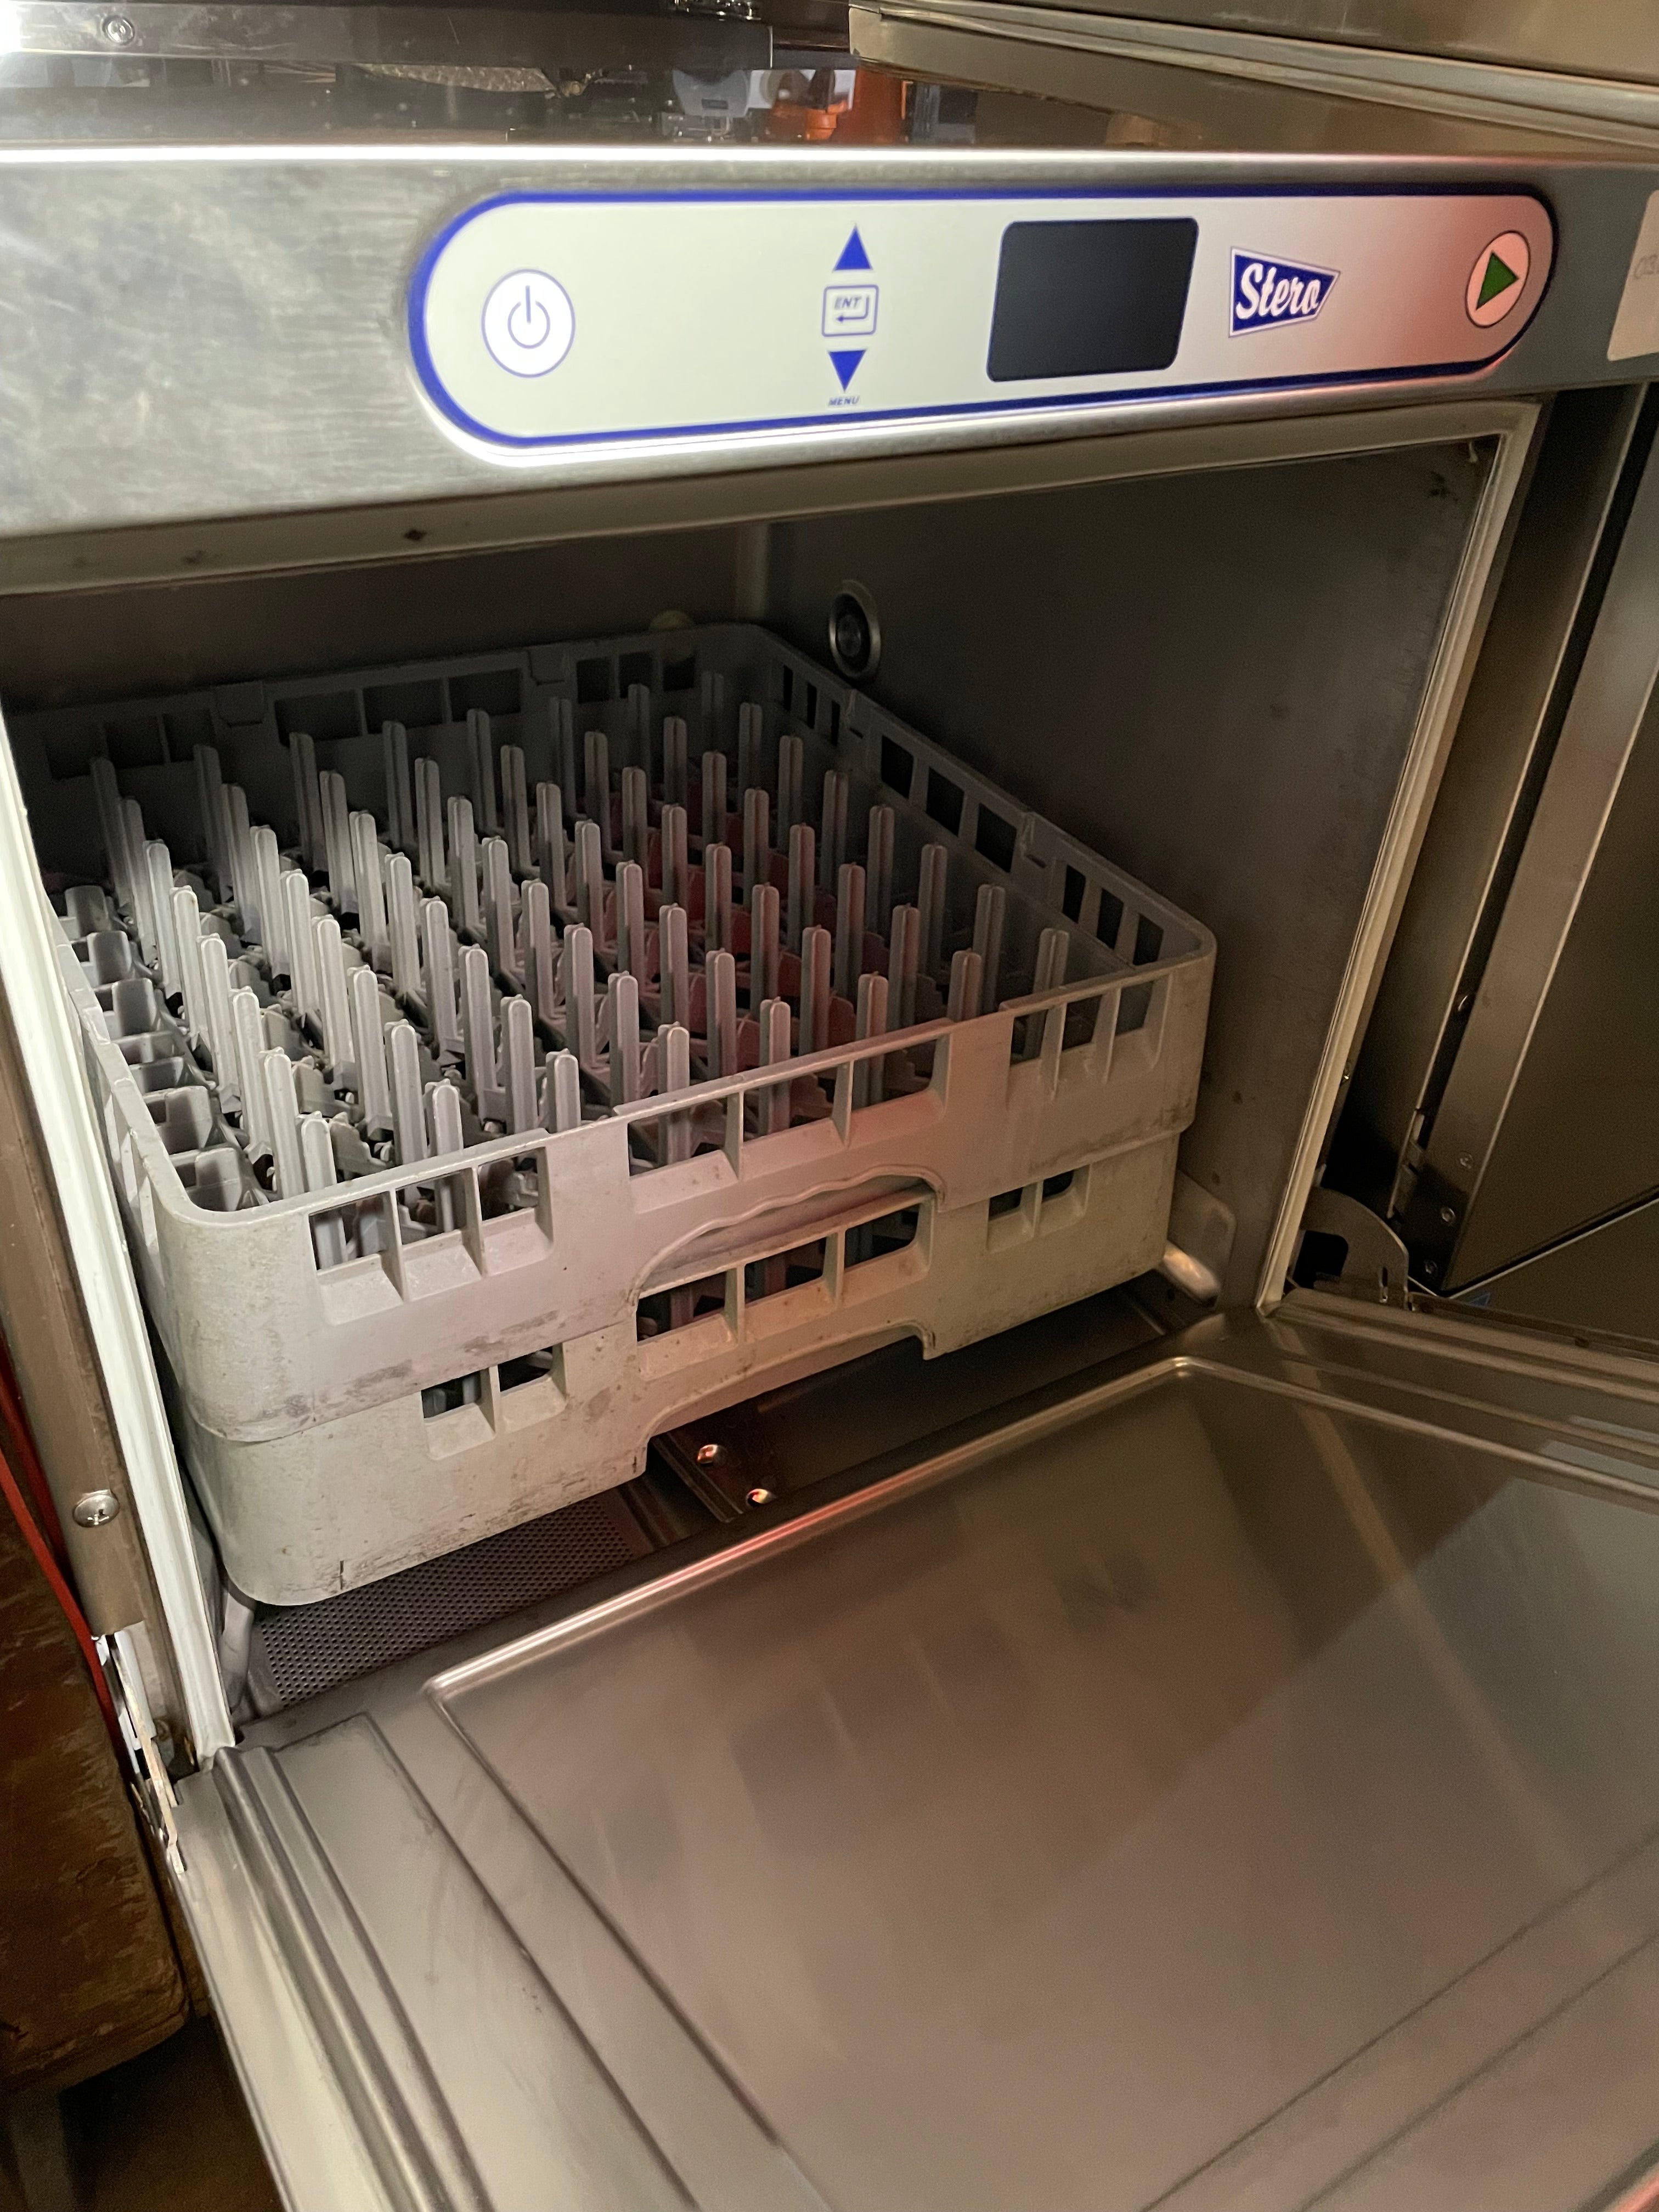 Thumbnail - Stero SUH-130273 Undercounter Dishwasher